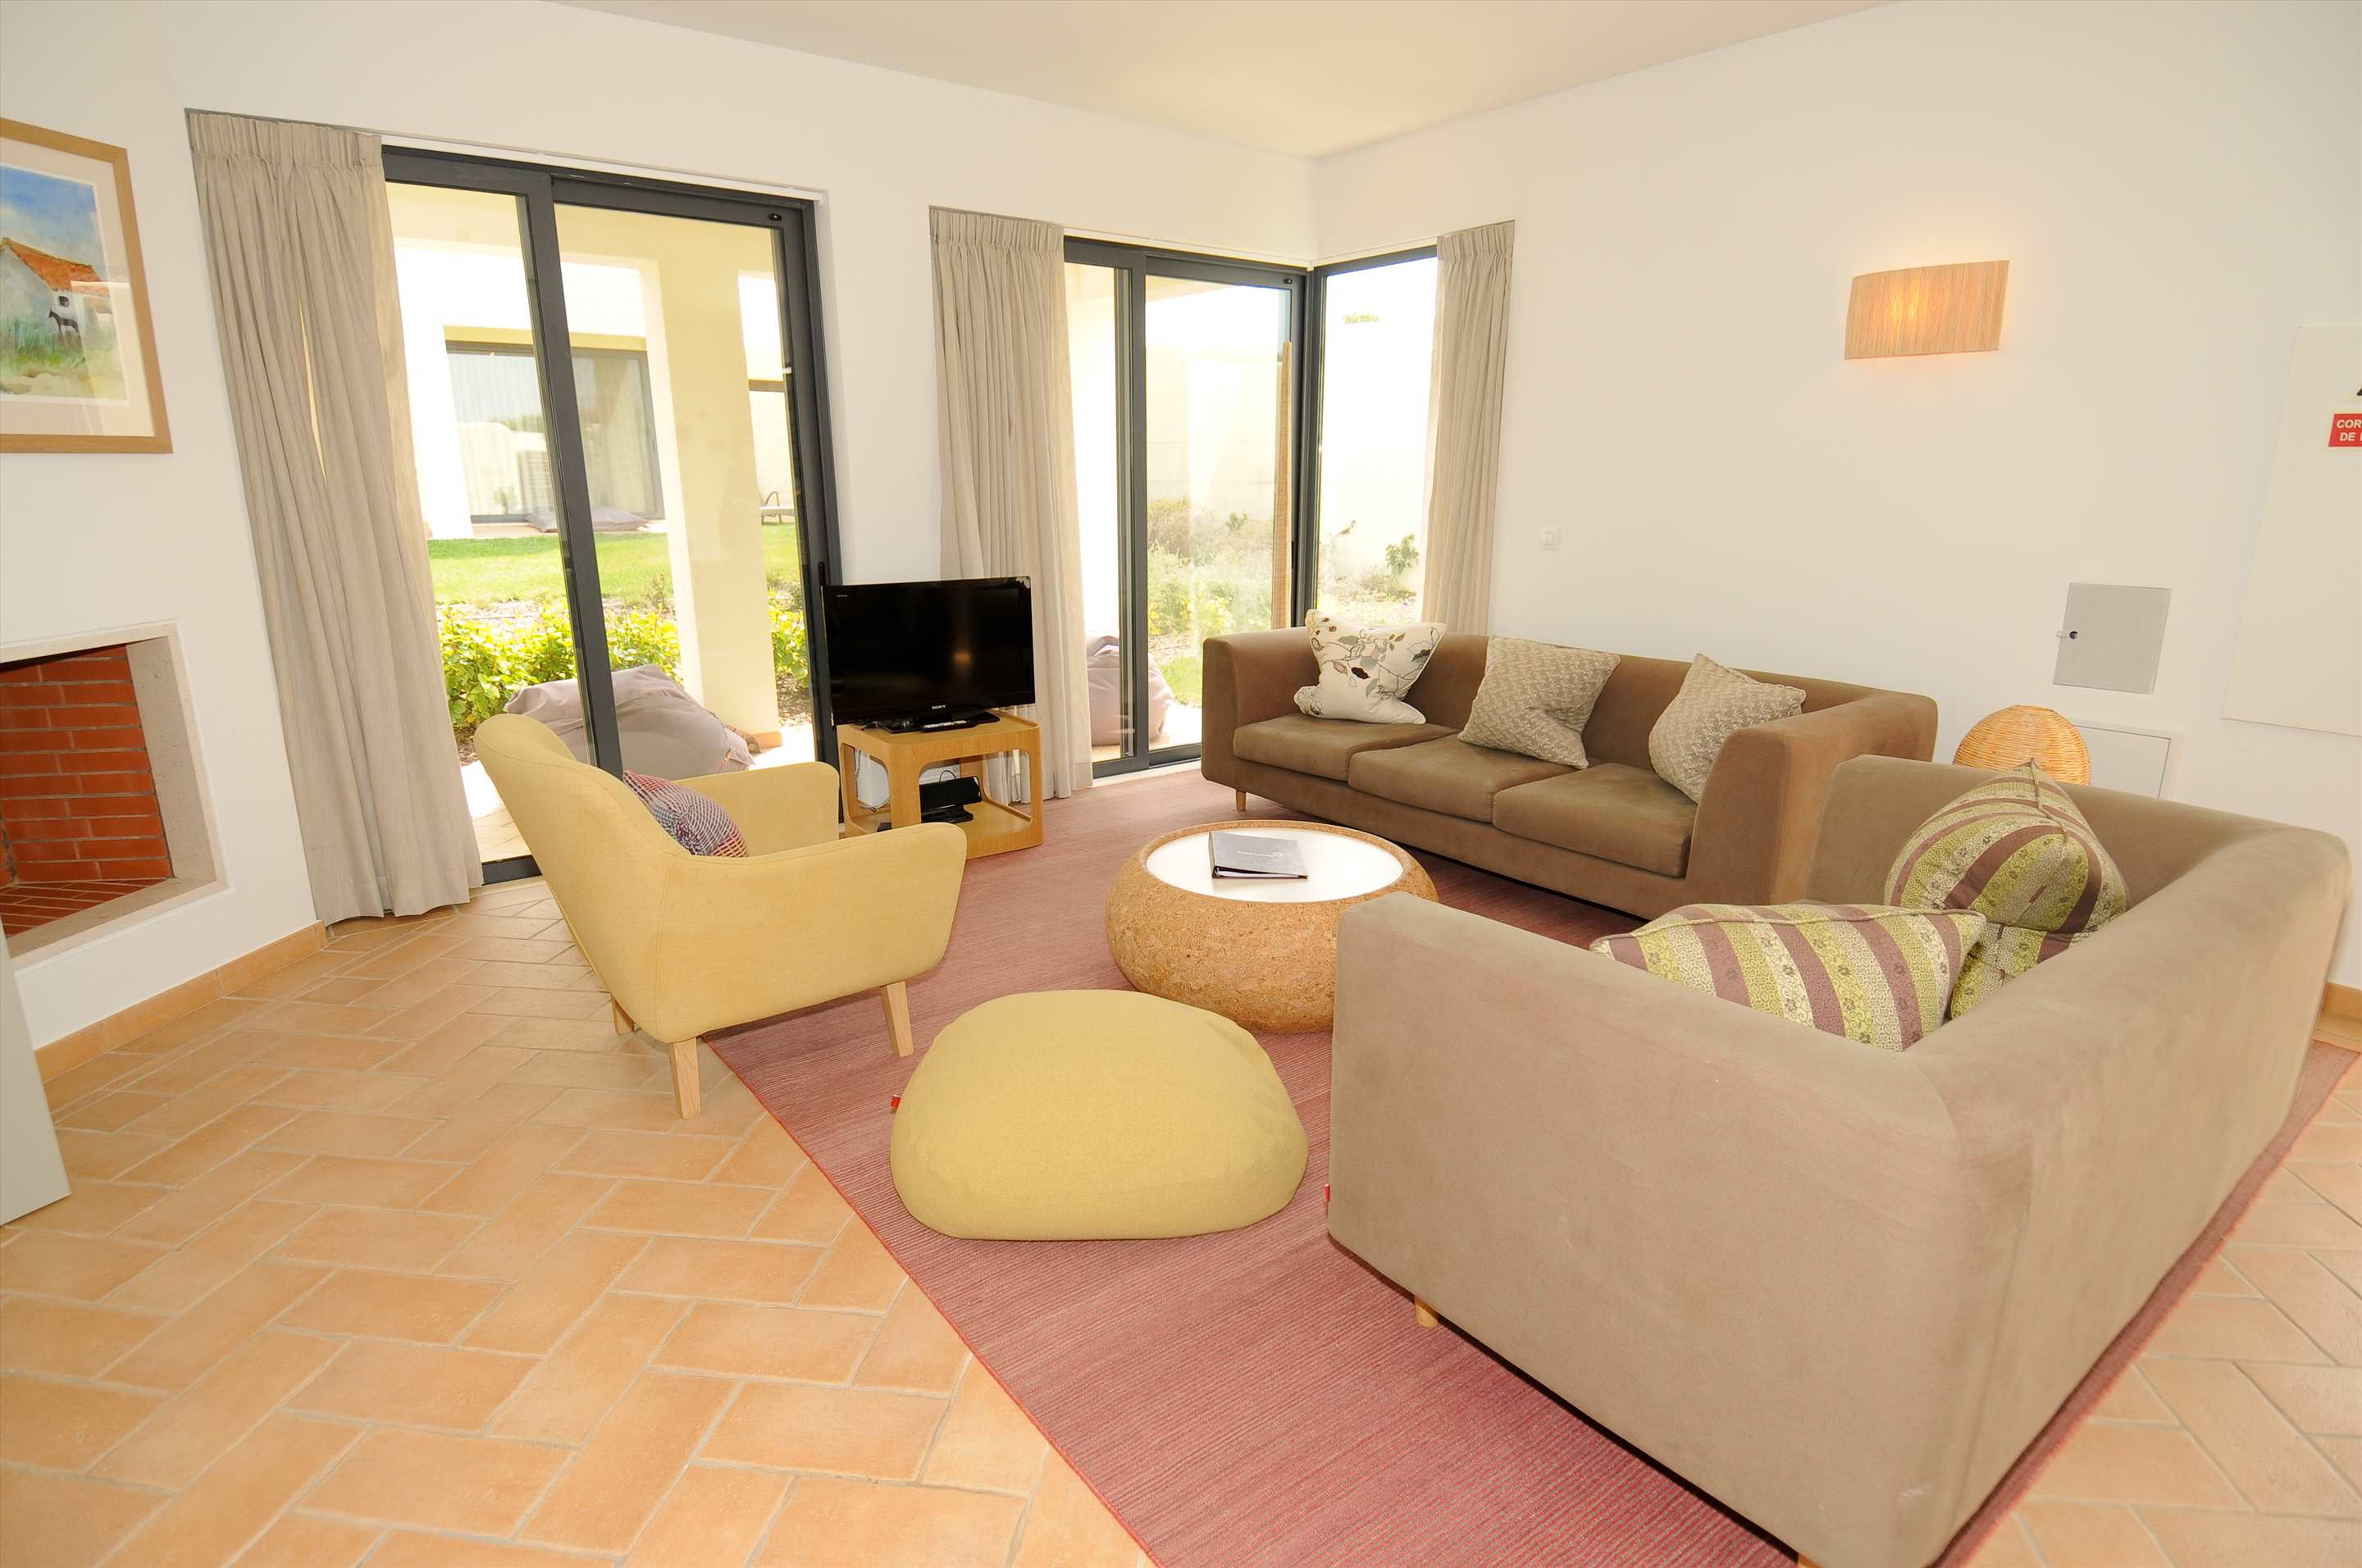 Martinhal Village Garden House, One Bedroom Apartment, 1 bedroom villa in Martinhal Sagres, Algarve Photo #1